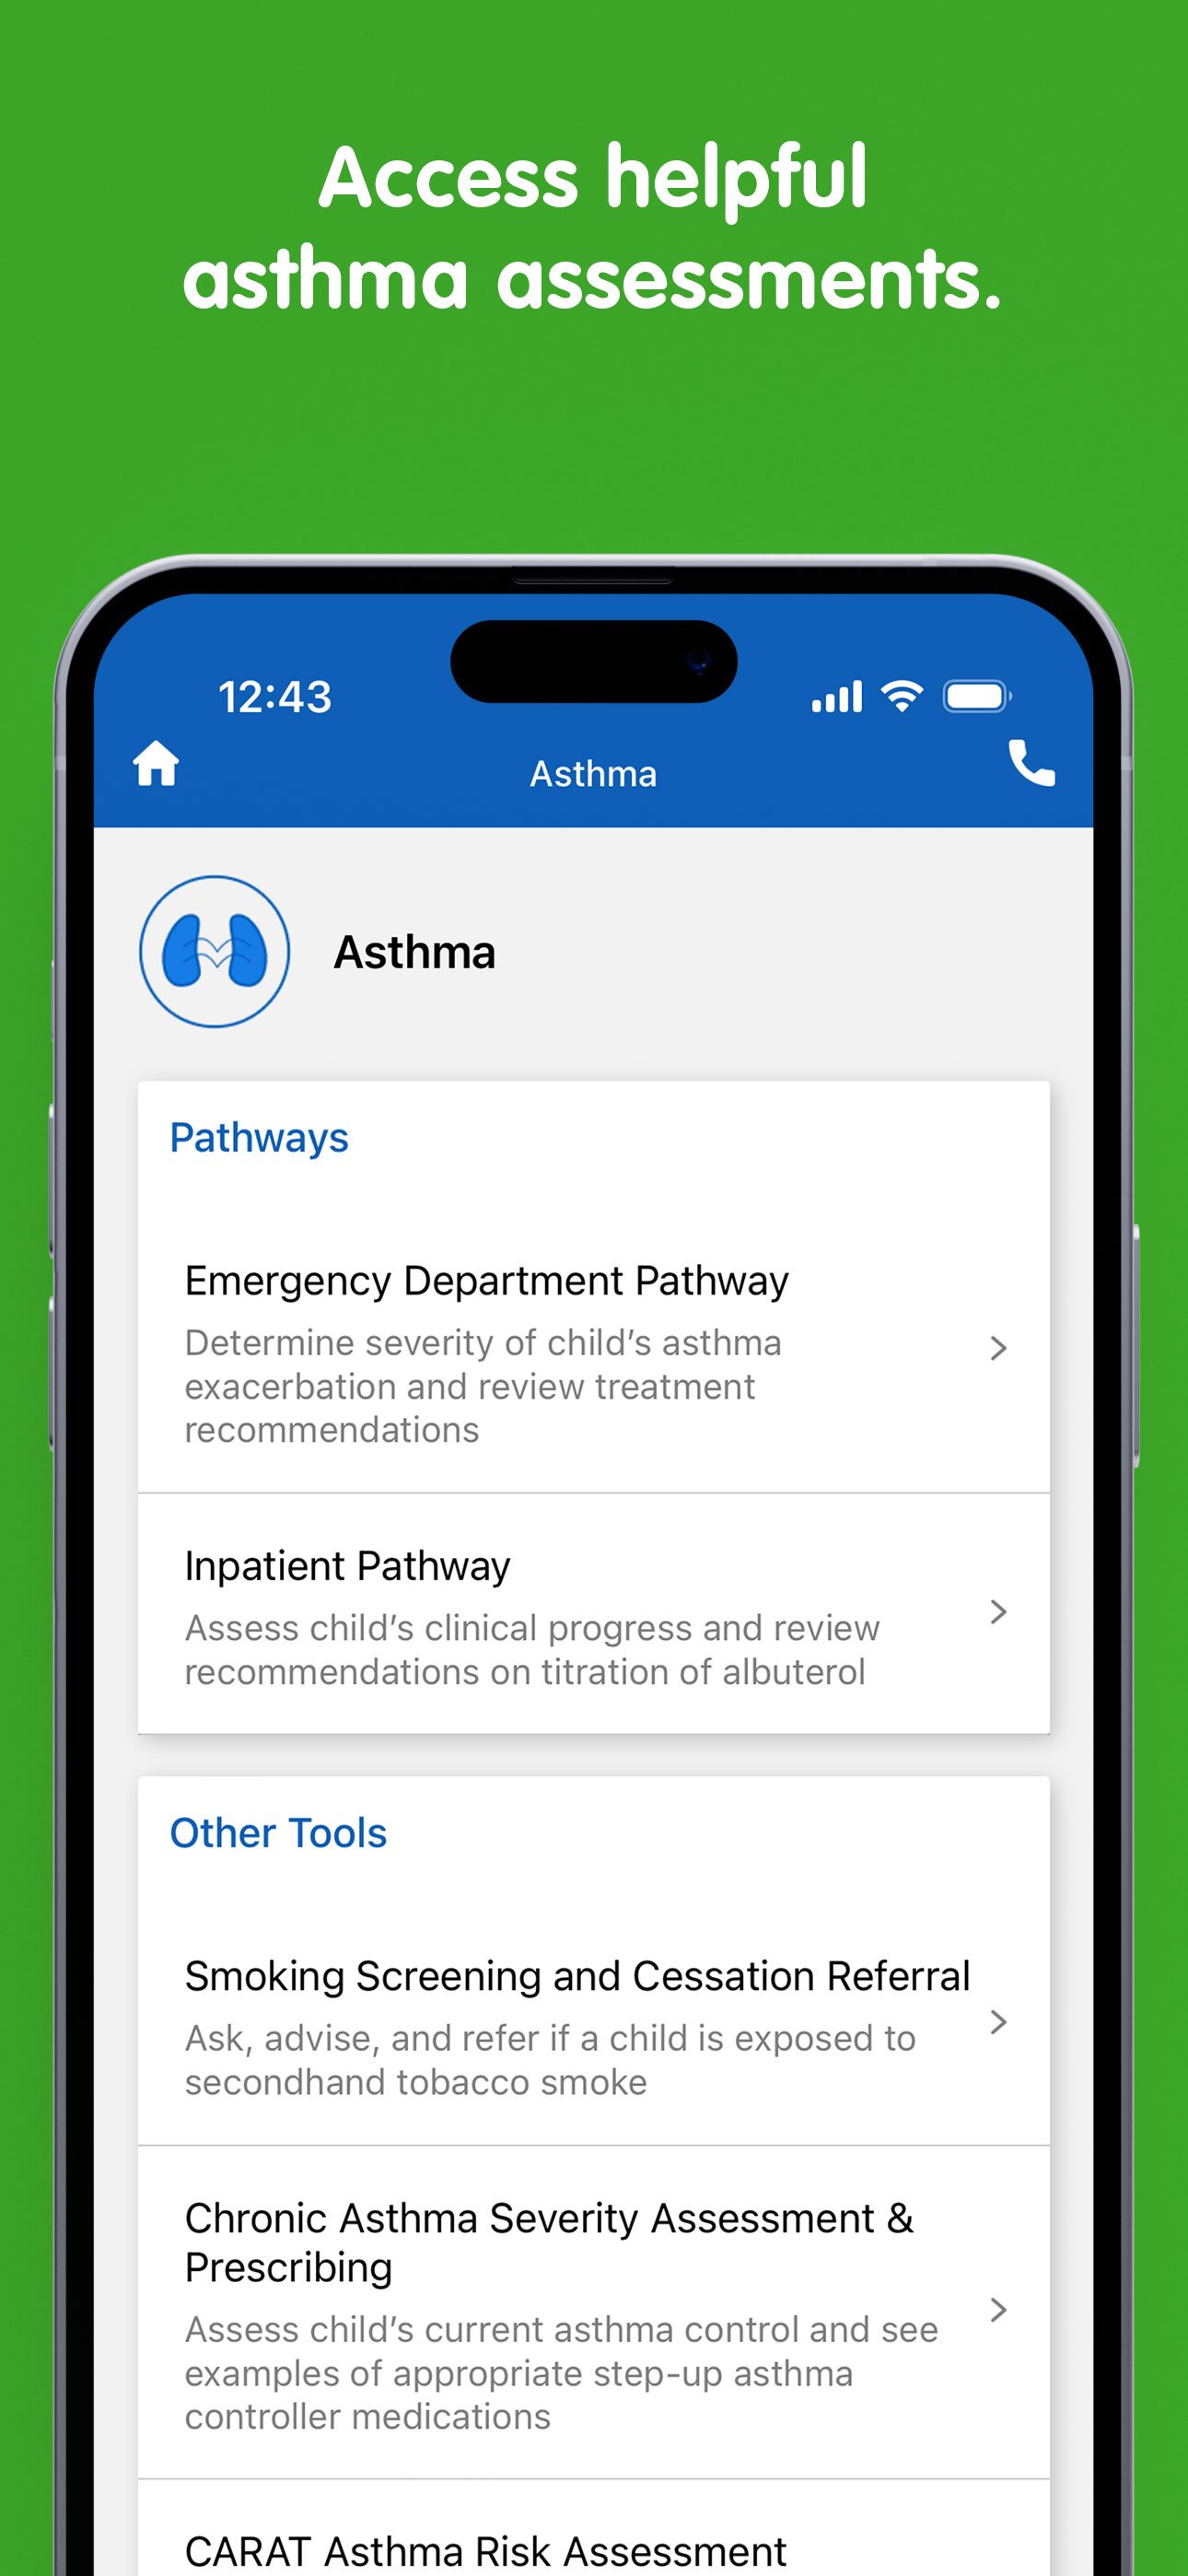 PedsGuide App "access helpful asthma assessments" screen